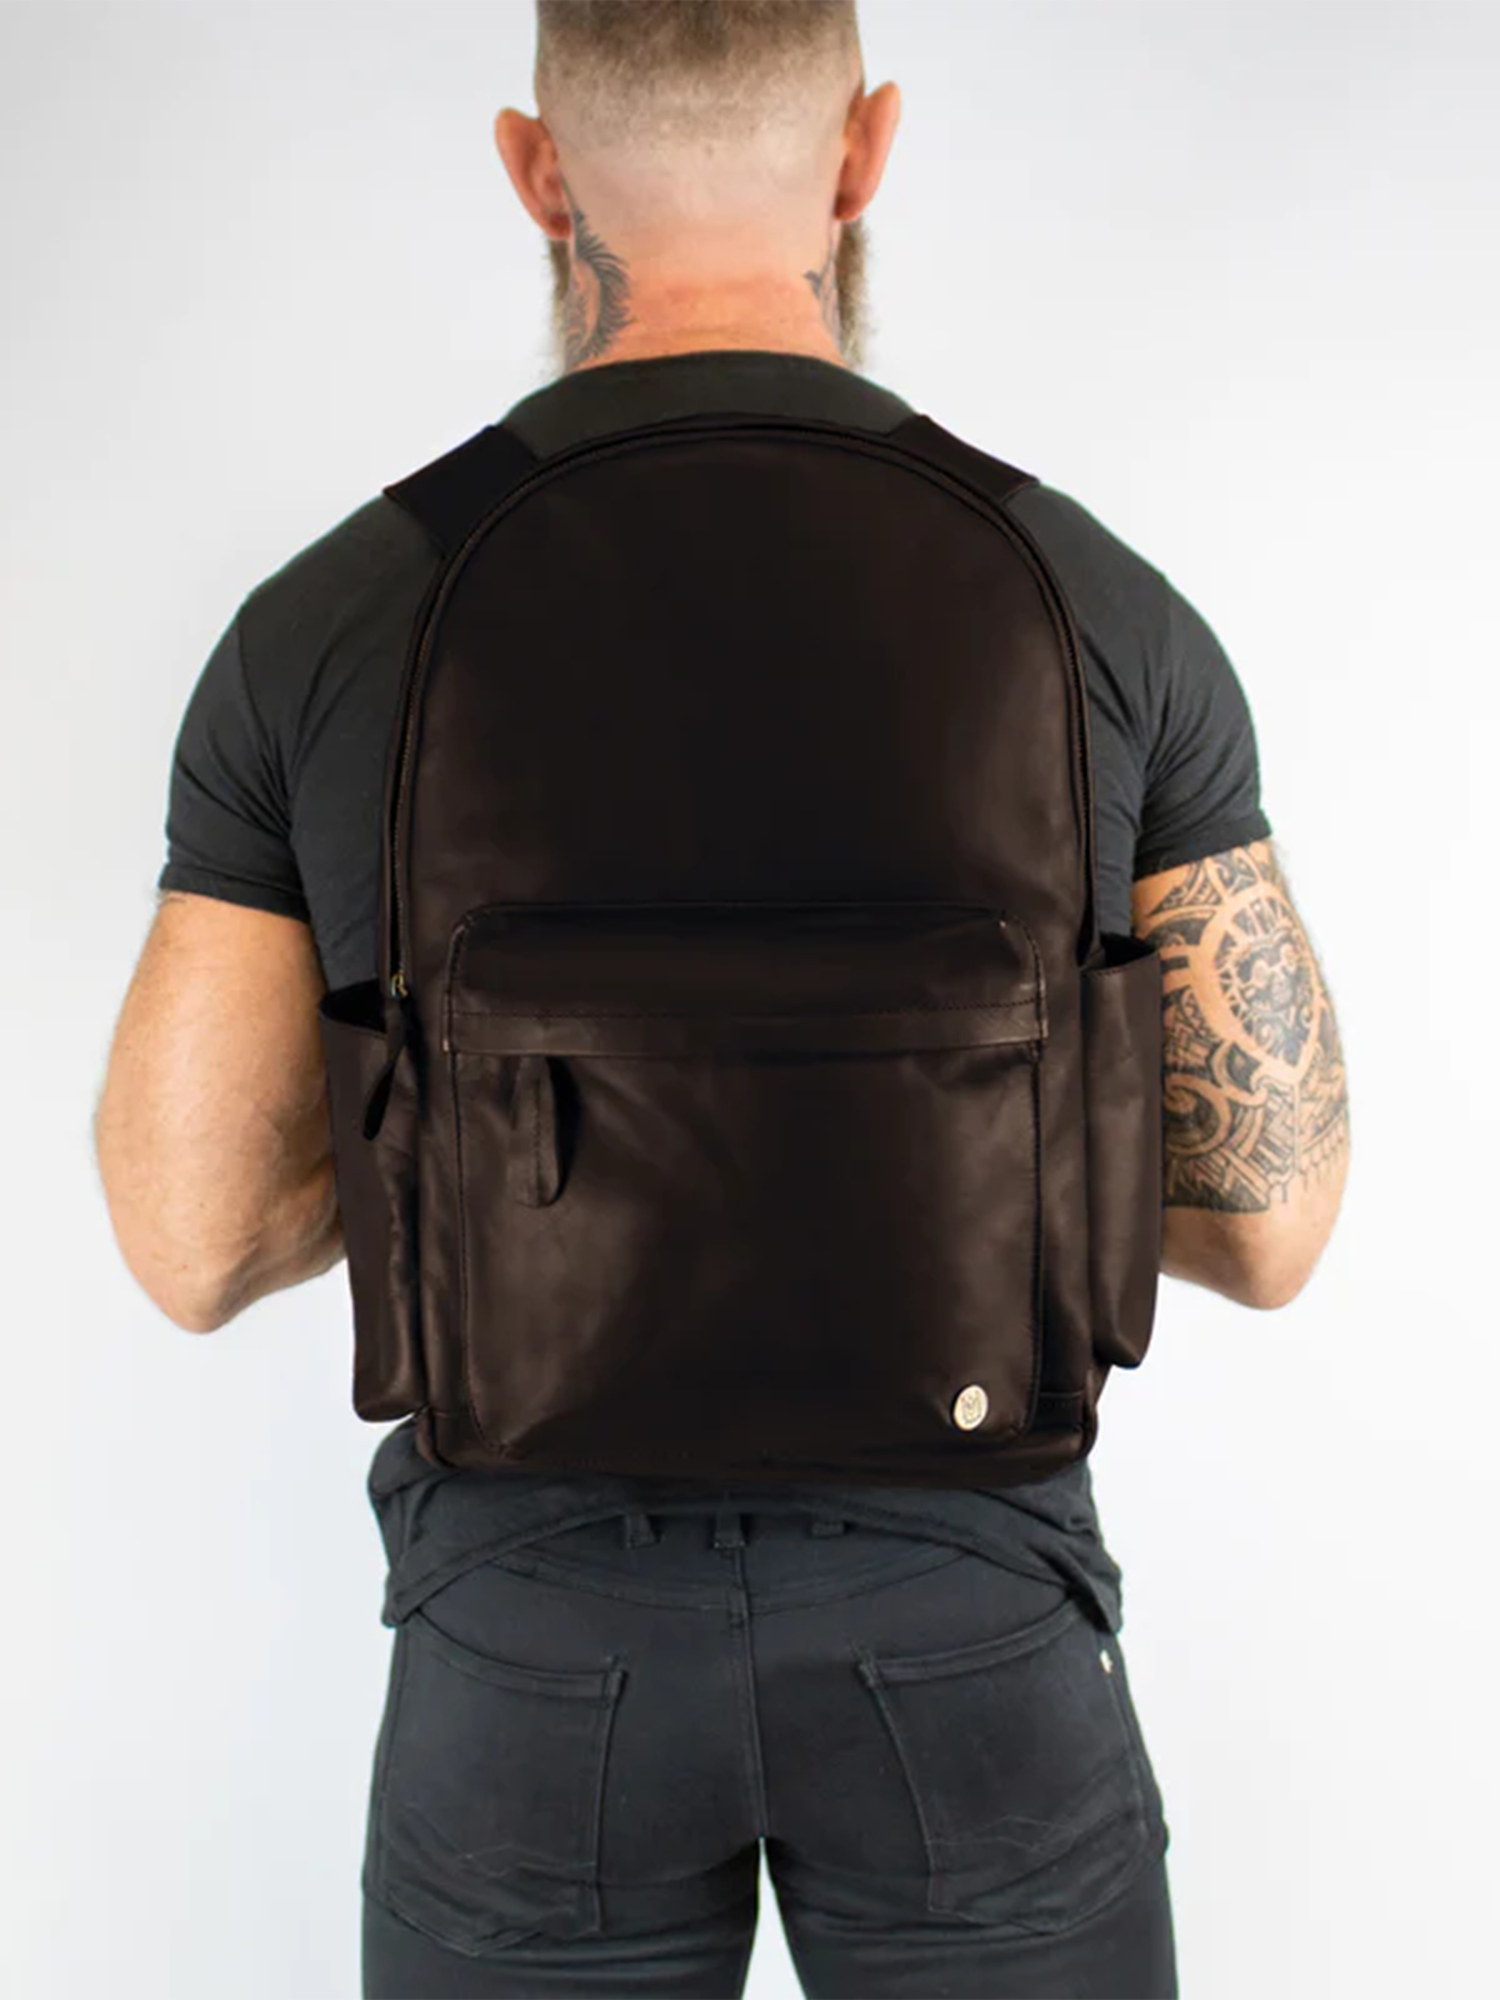 Mahogany Luxure Classic Backpack